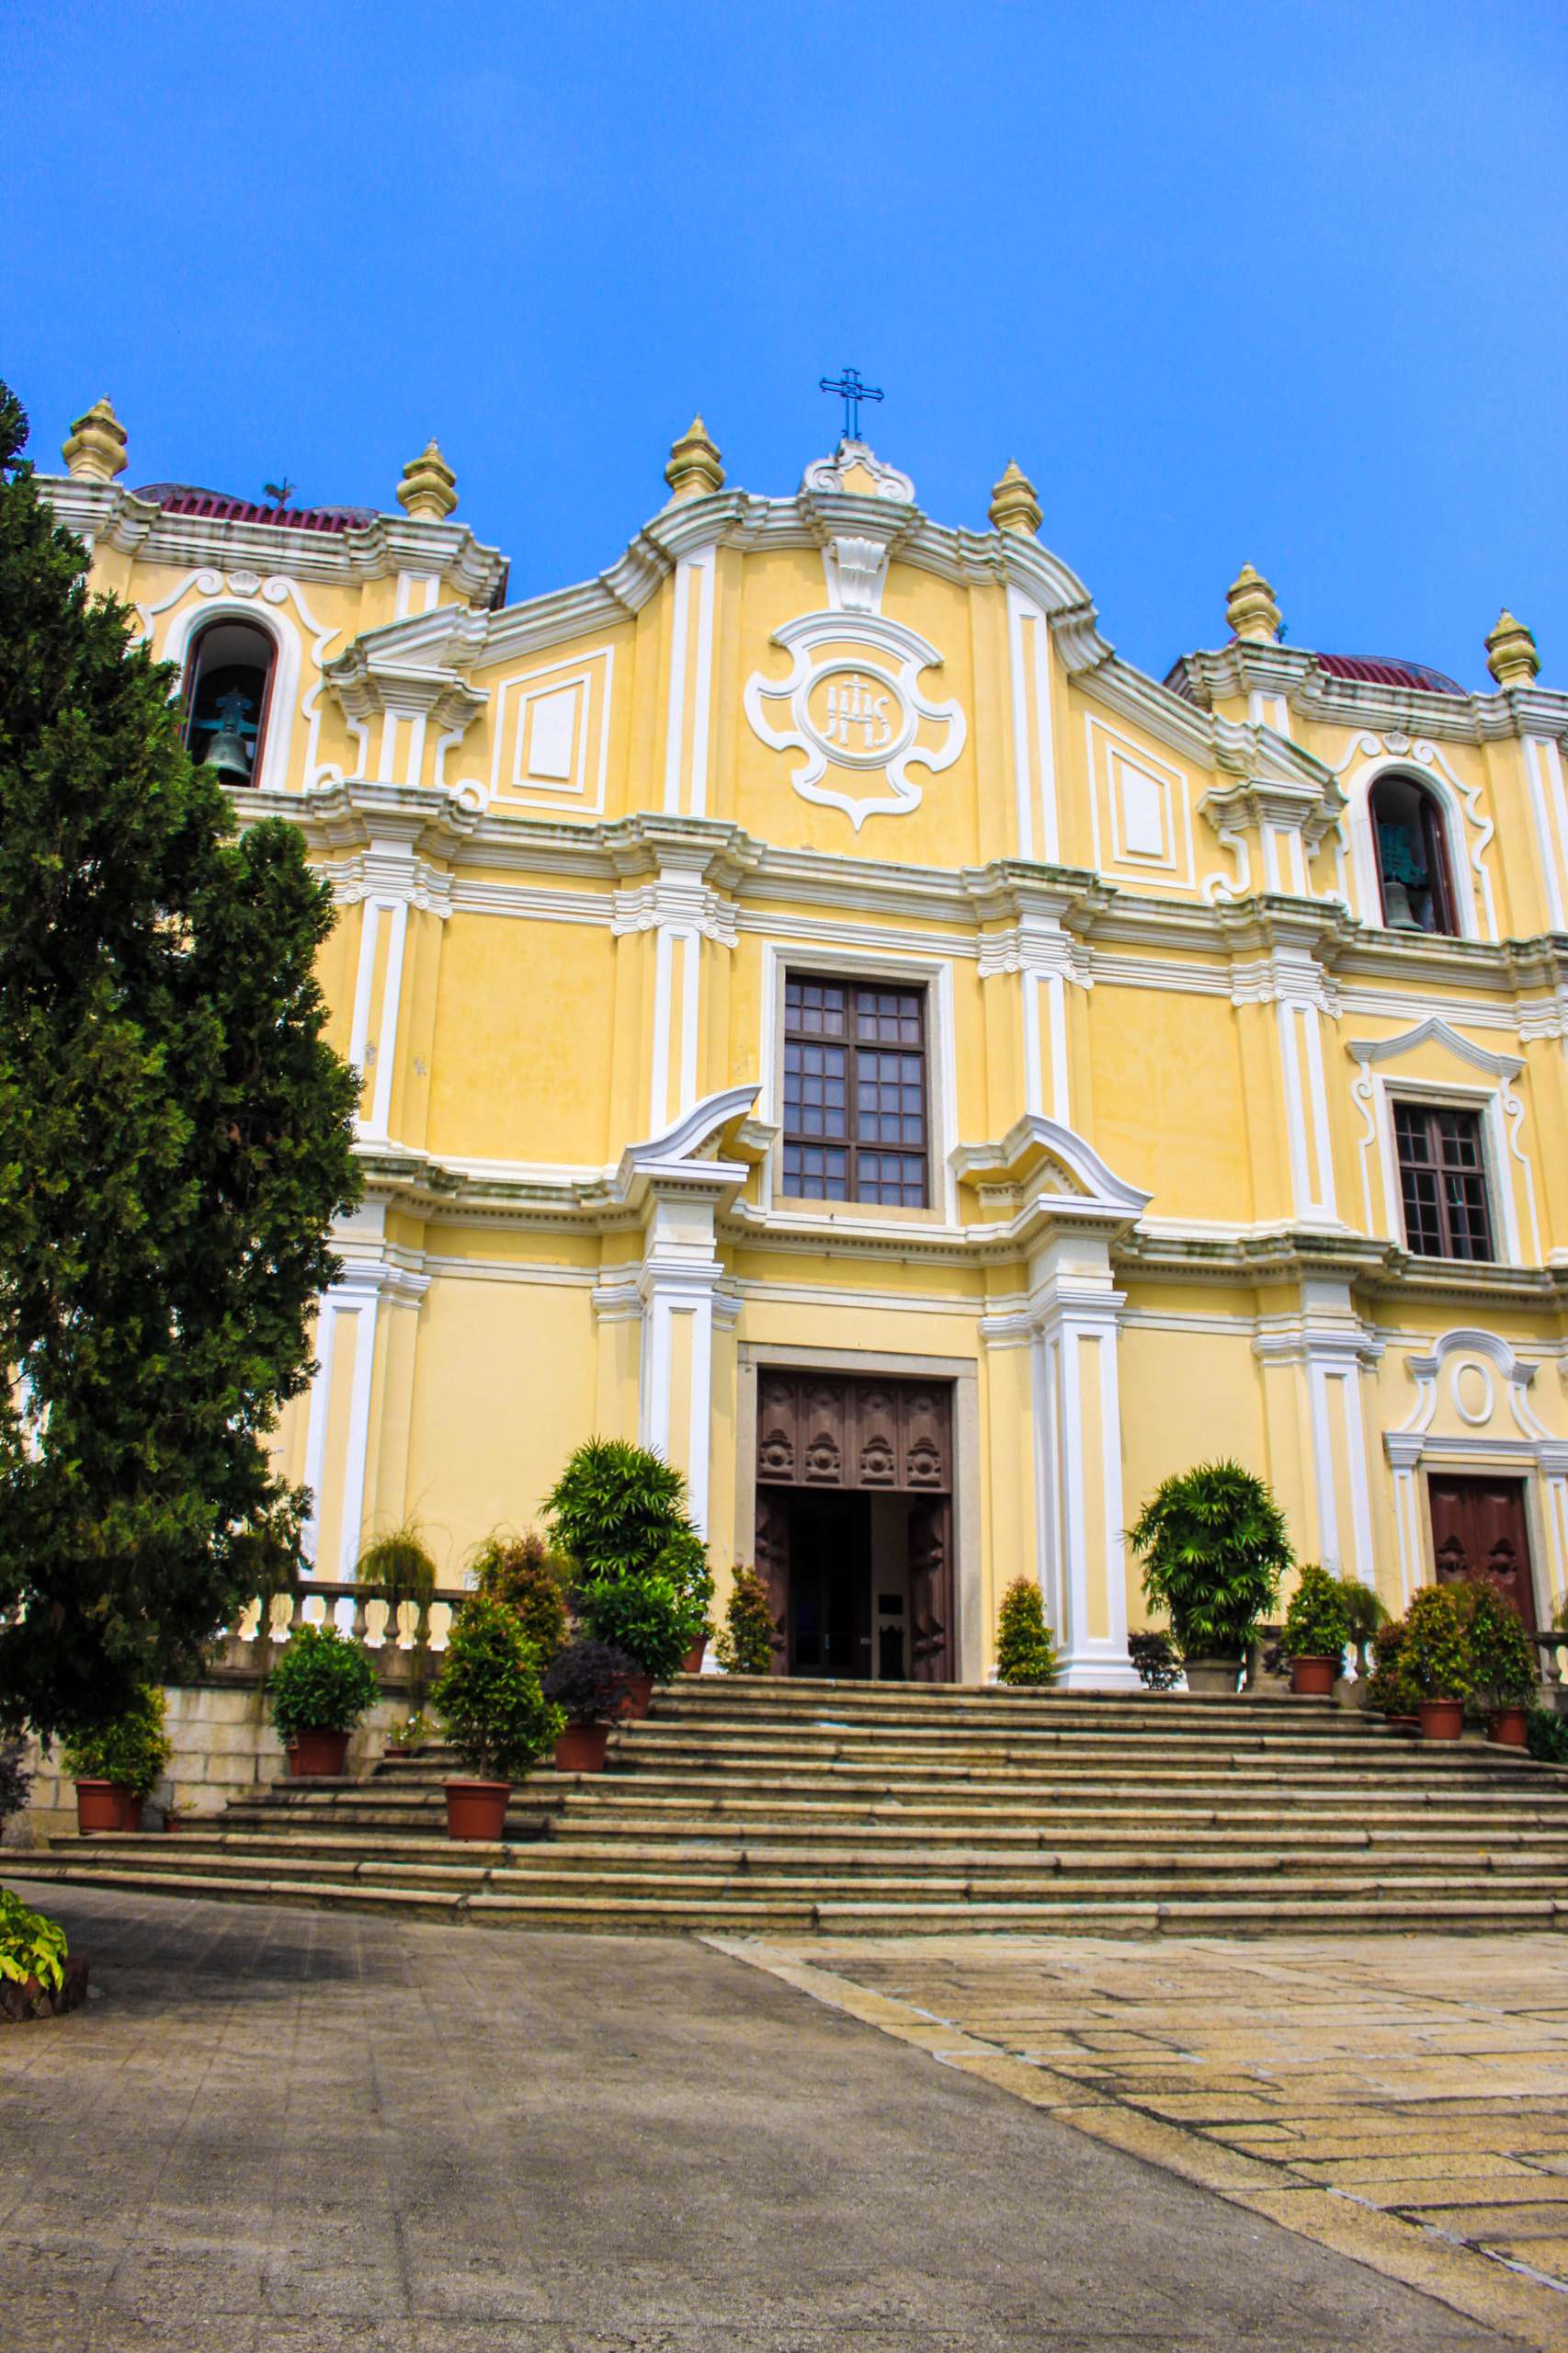 St. Joseph Seminary and Church in Macau